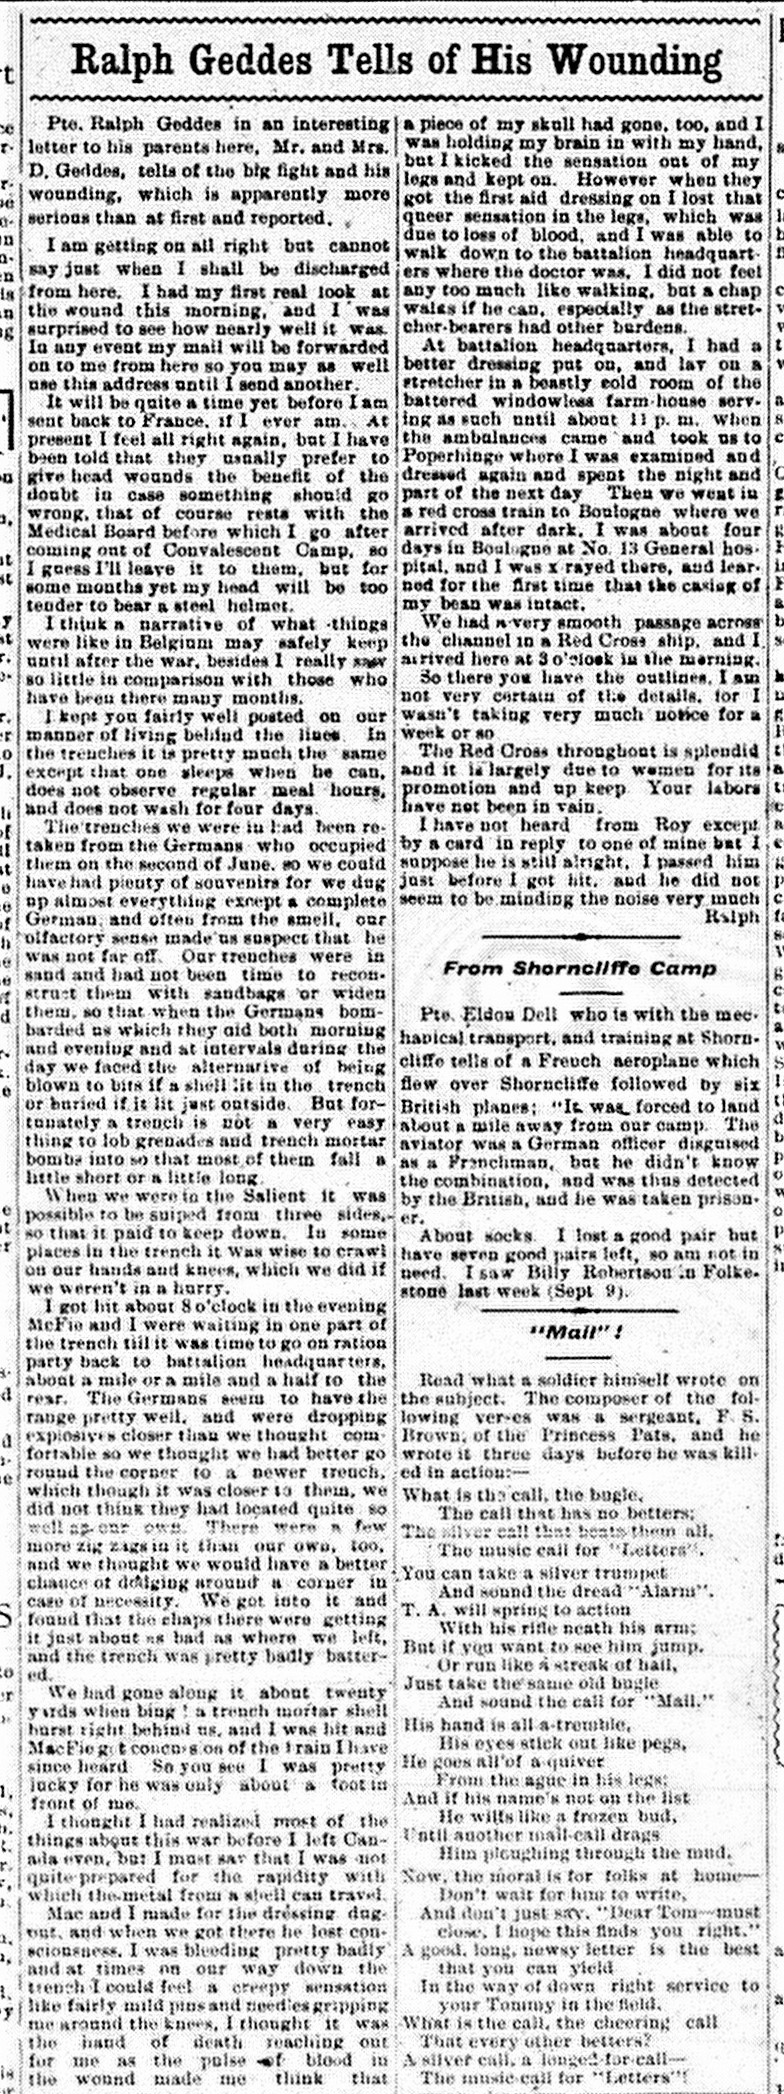 Port Elgin Times, October 4, 1916, p.1